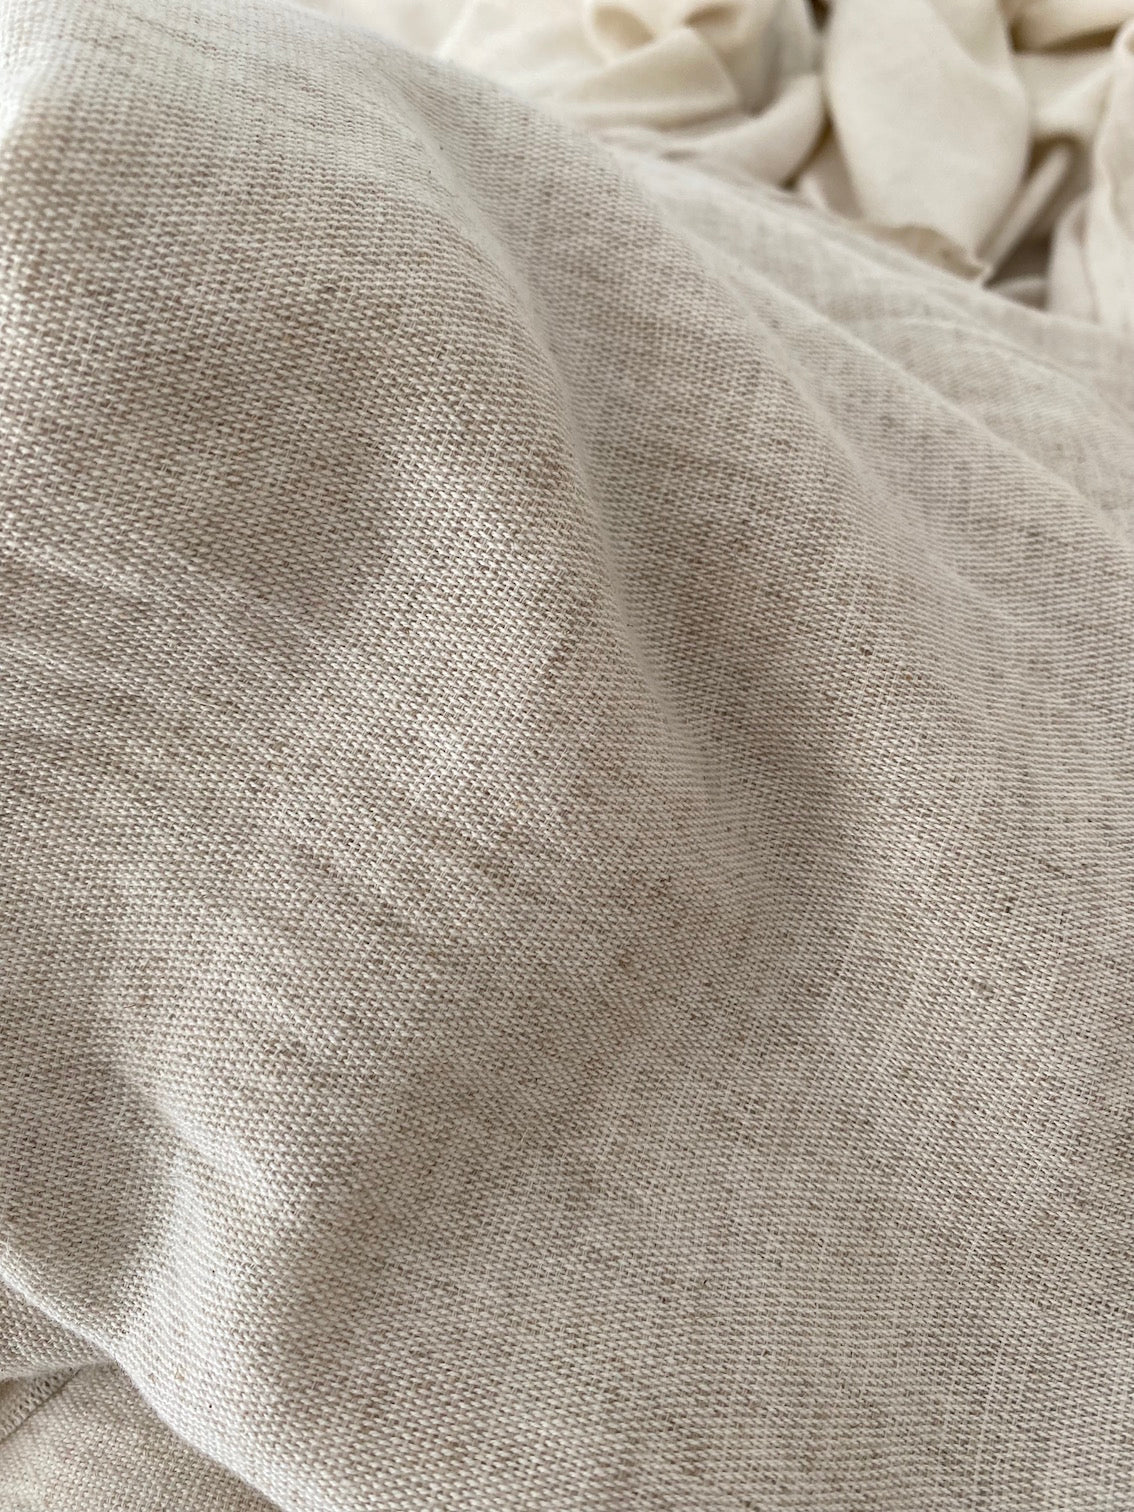 Buy Linen Cotton Fabric Online Cheap